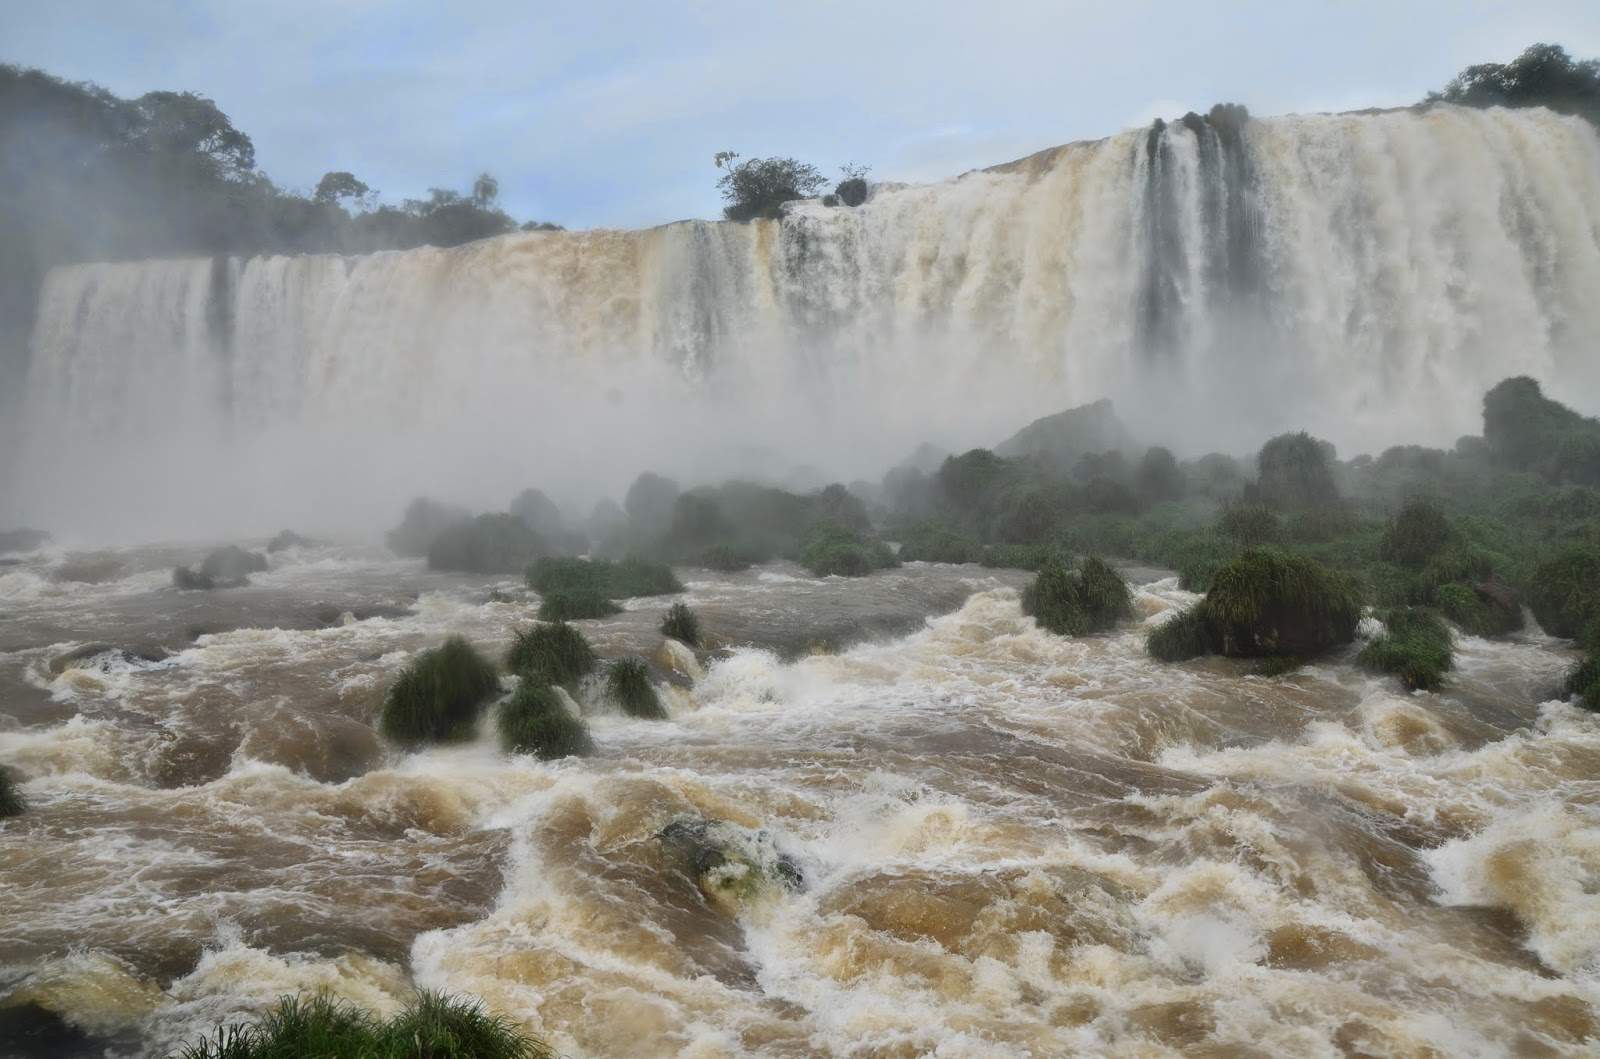 A closer look at the falls at Iguaçu National Park in Brazil